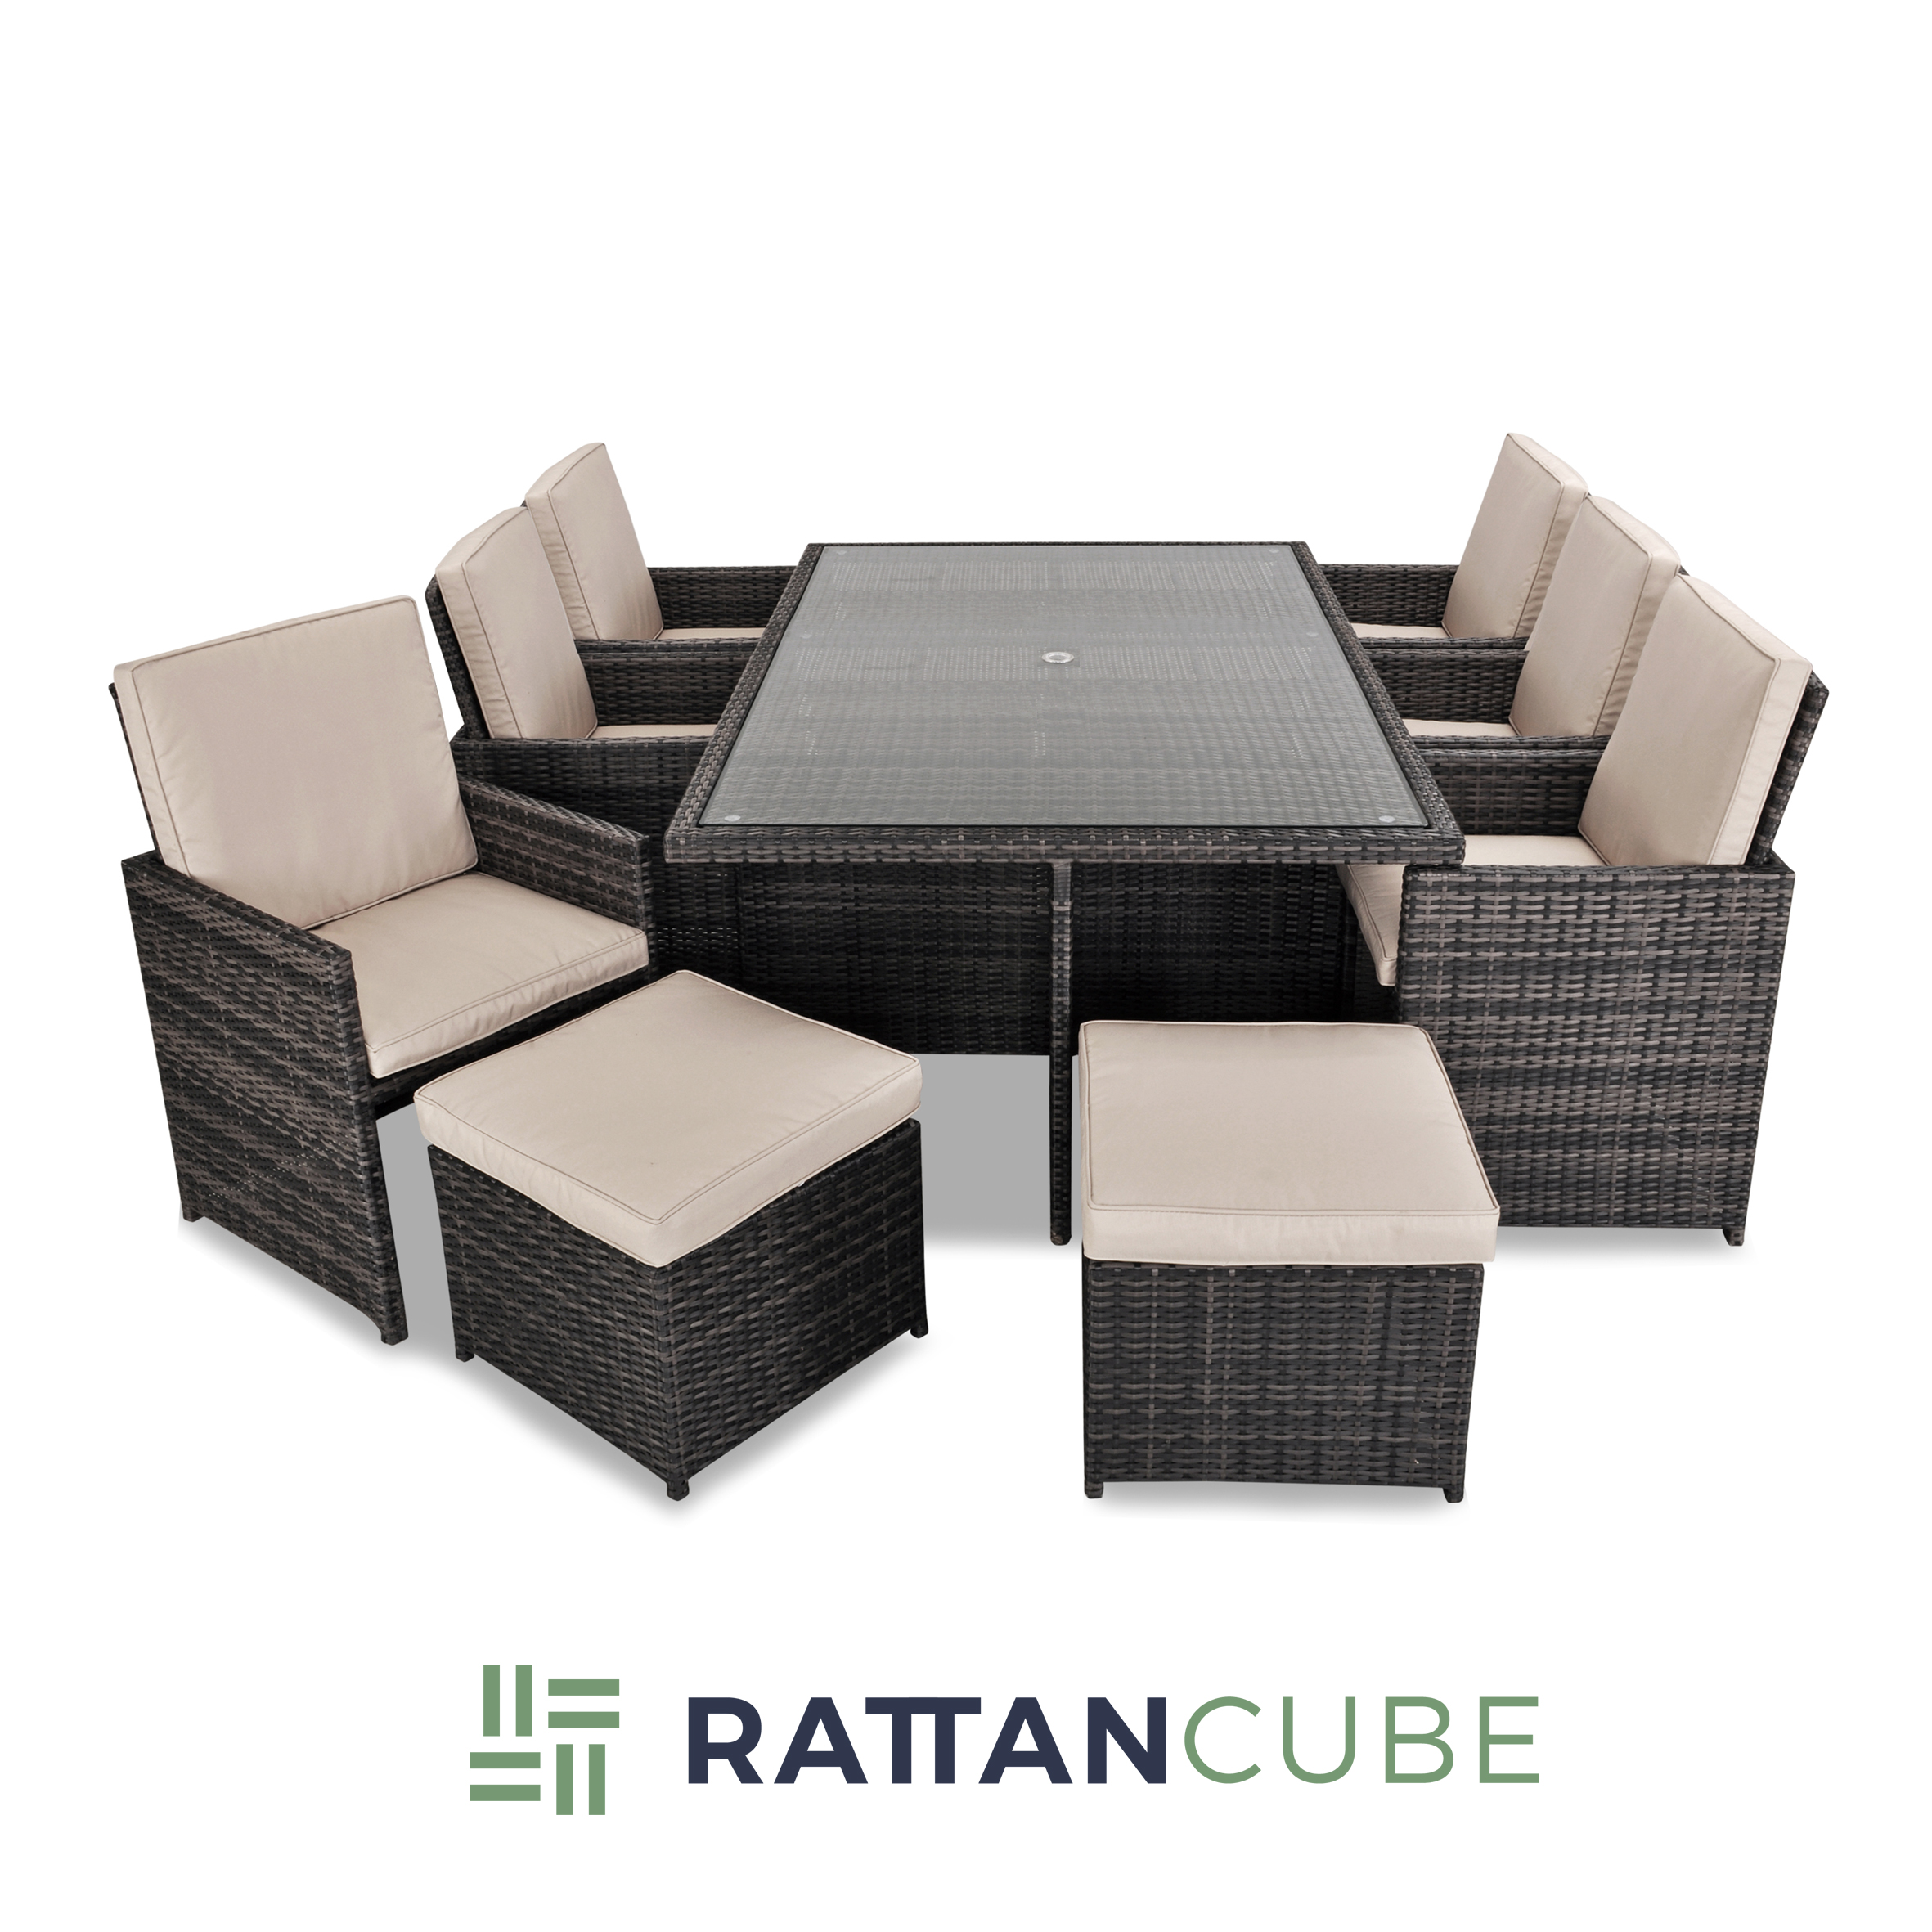 12 Seater Rattan Garden Furniture Set | Marbella Range